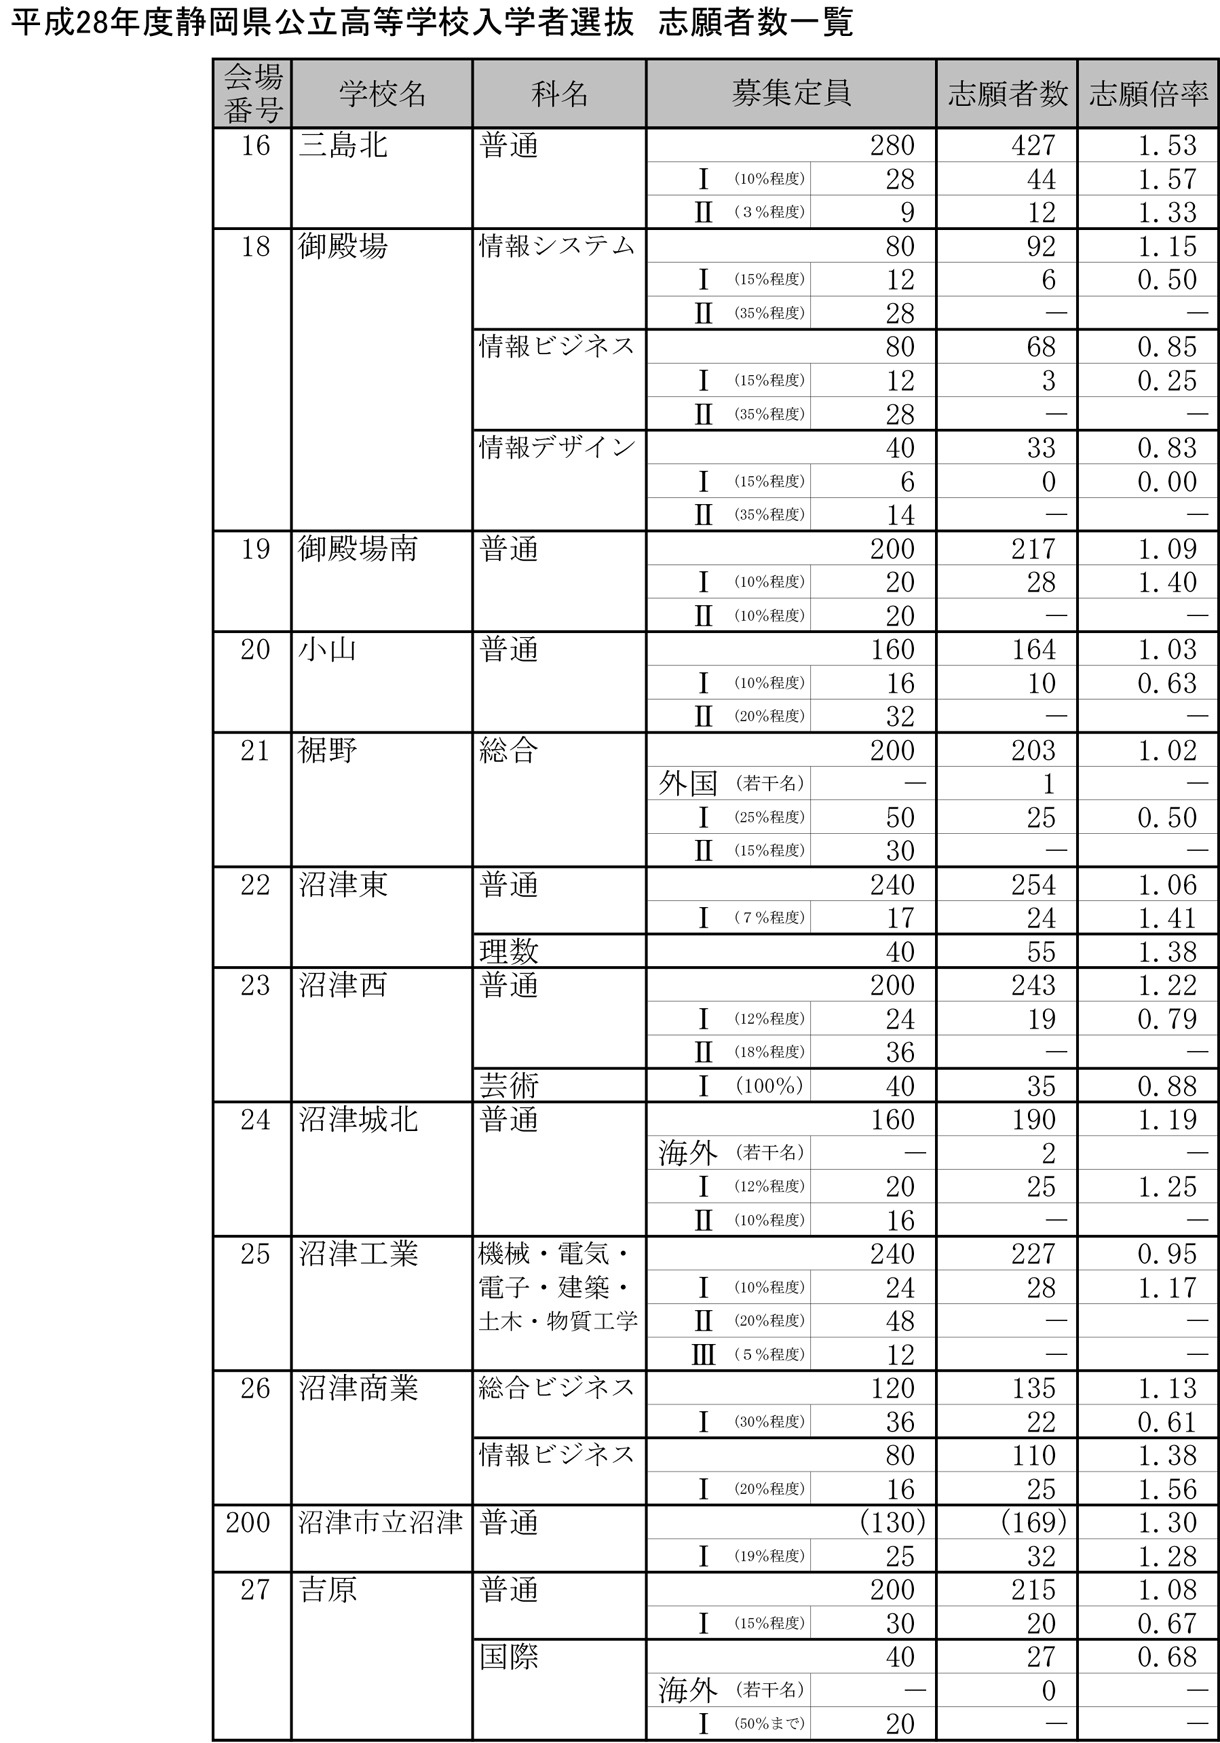 高校受験16 静岡県公立高校の志願状況 倍率 2 18時点 静岡1 倍 清水東1 32倍 リセマム